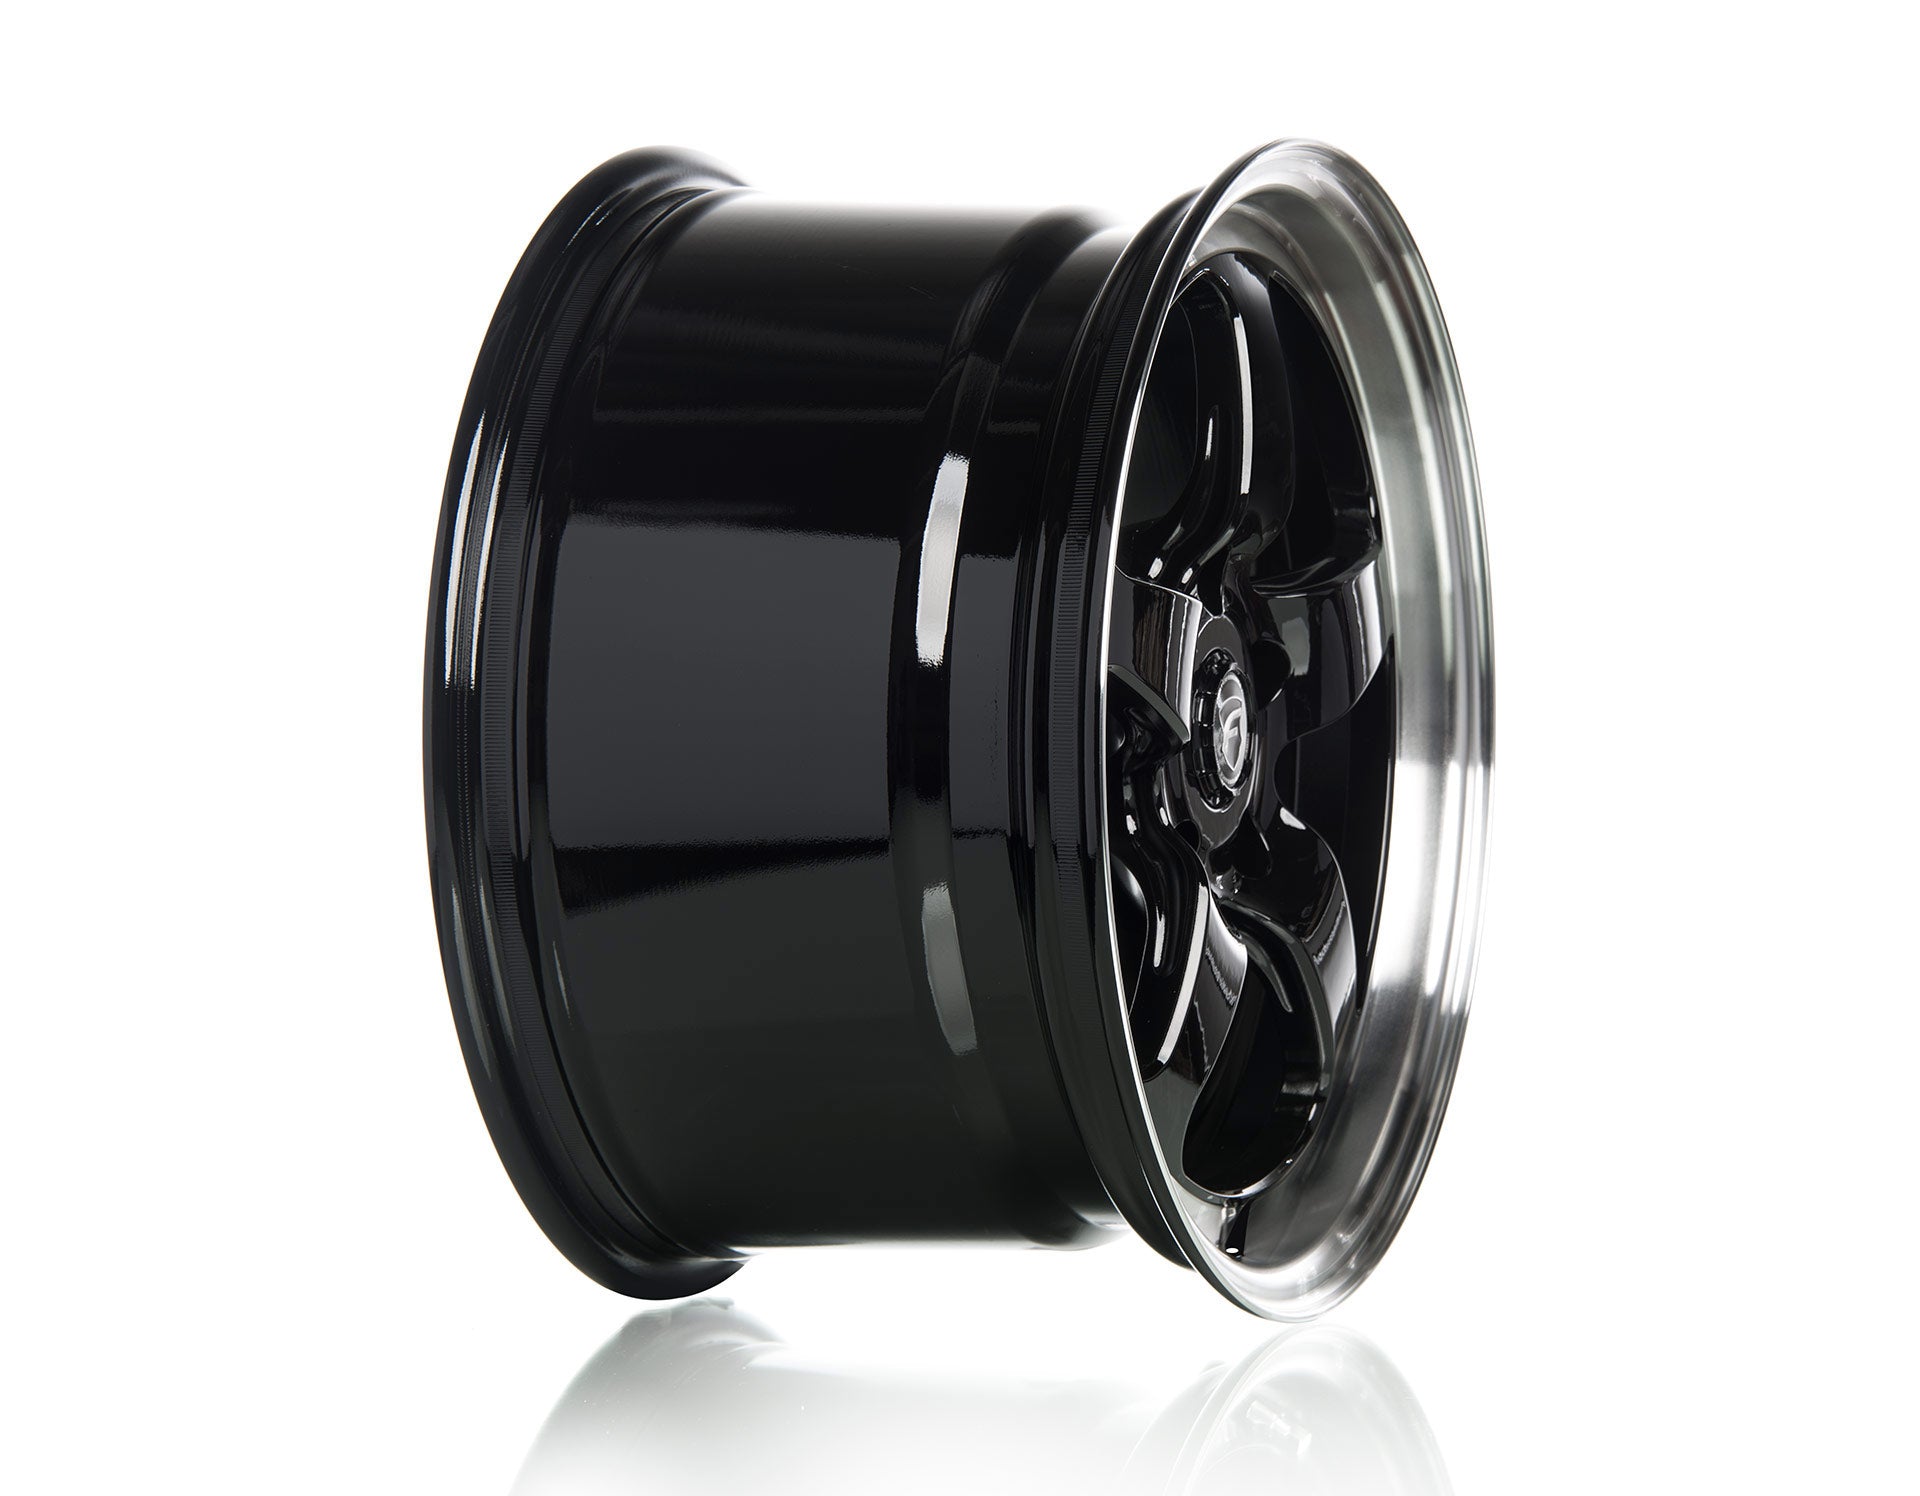 Forgestar D5 Drag Racing Wheels - Gloss Black w/Machined Lip - 17x5 - Sold Individually - Motorsports LA